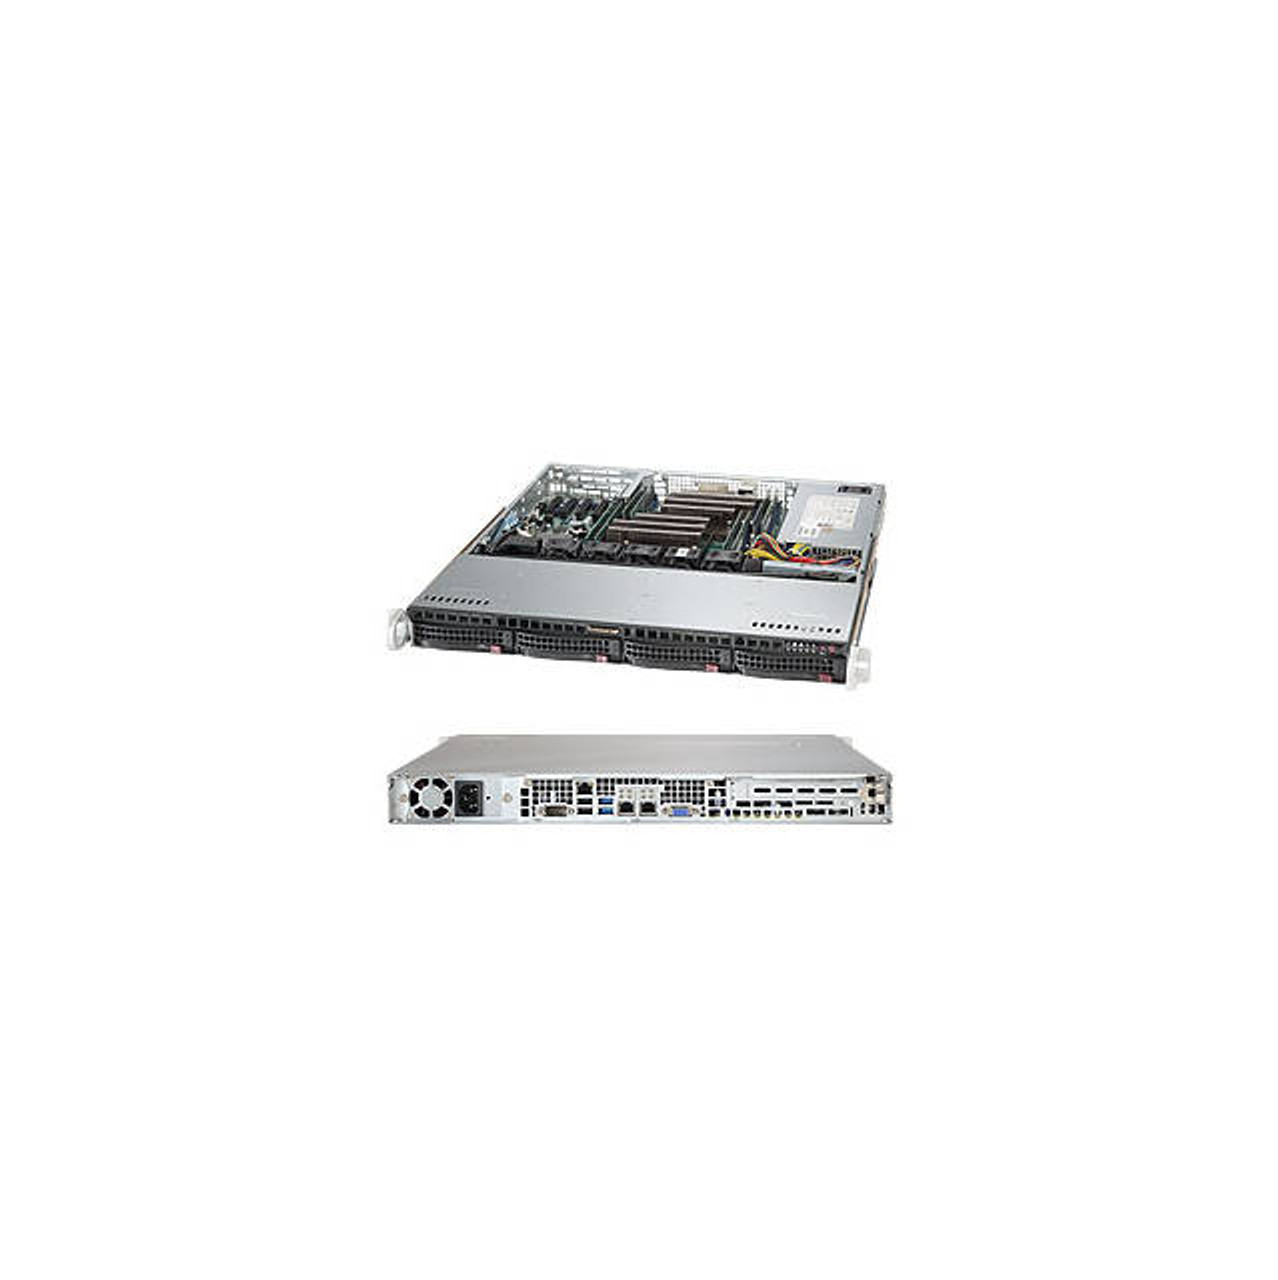 Supermicro SuperServer SYS-6018R-MT Dual LGA2011 440W/480W 1U Rackmount Server Barebone System (Black)